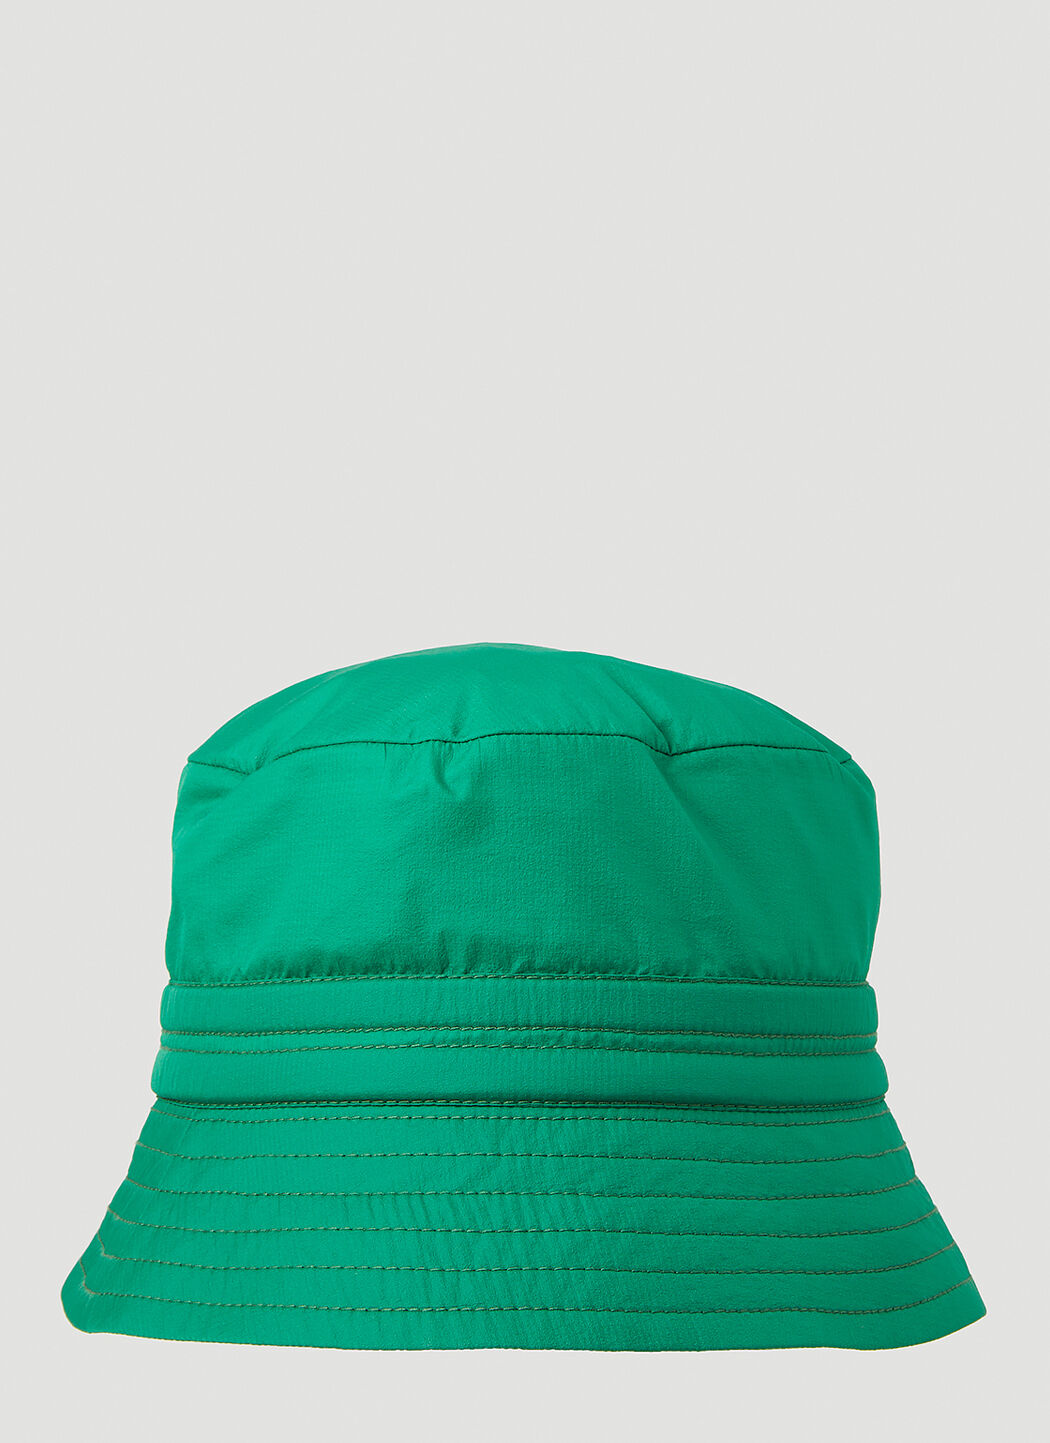 Craig Green Tunnel Bucket Hat Black cgr0152005